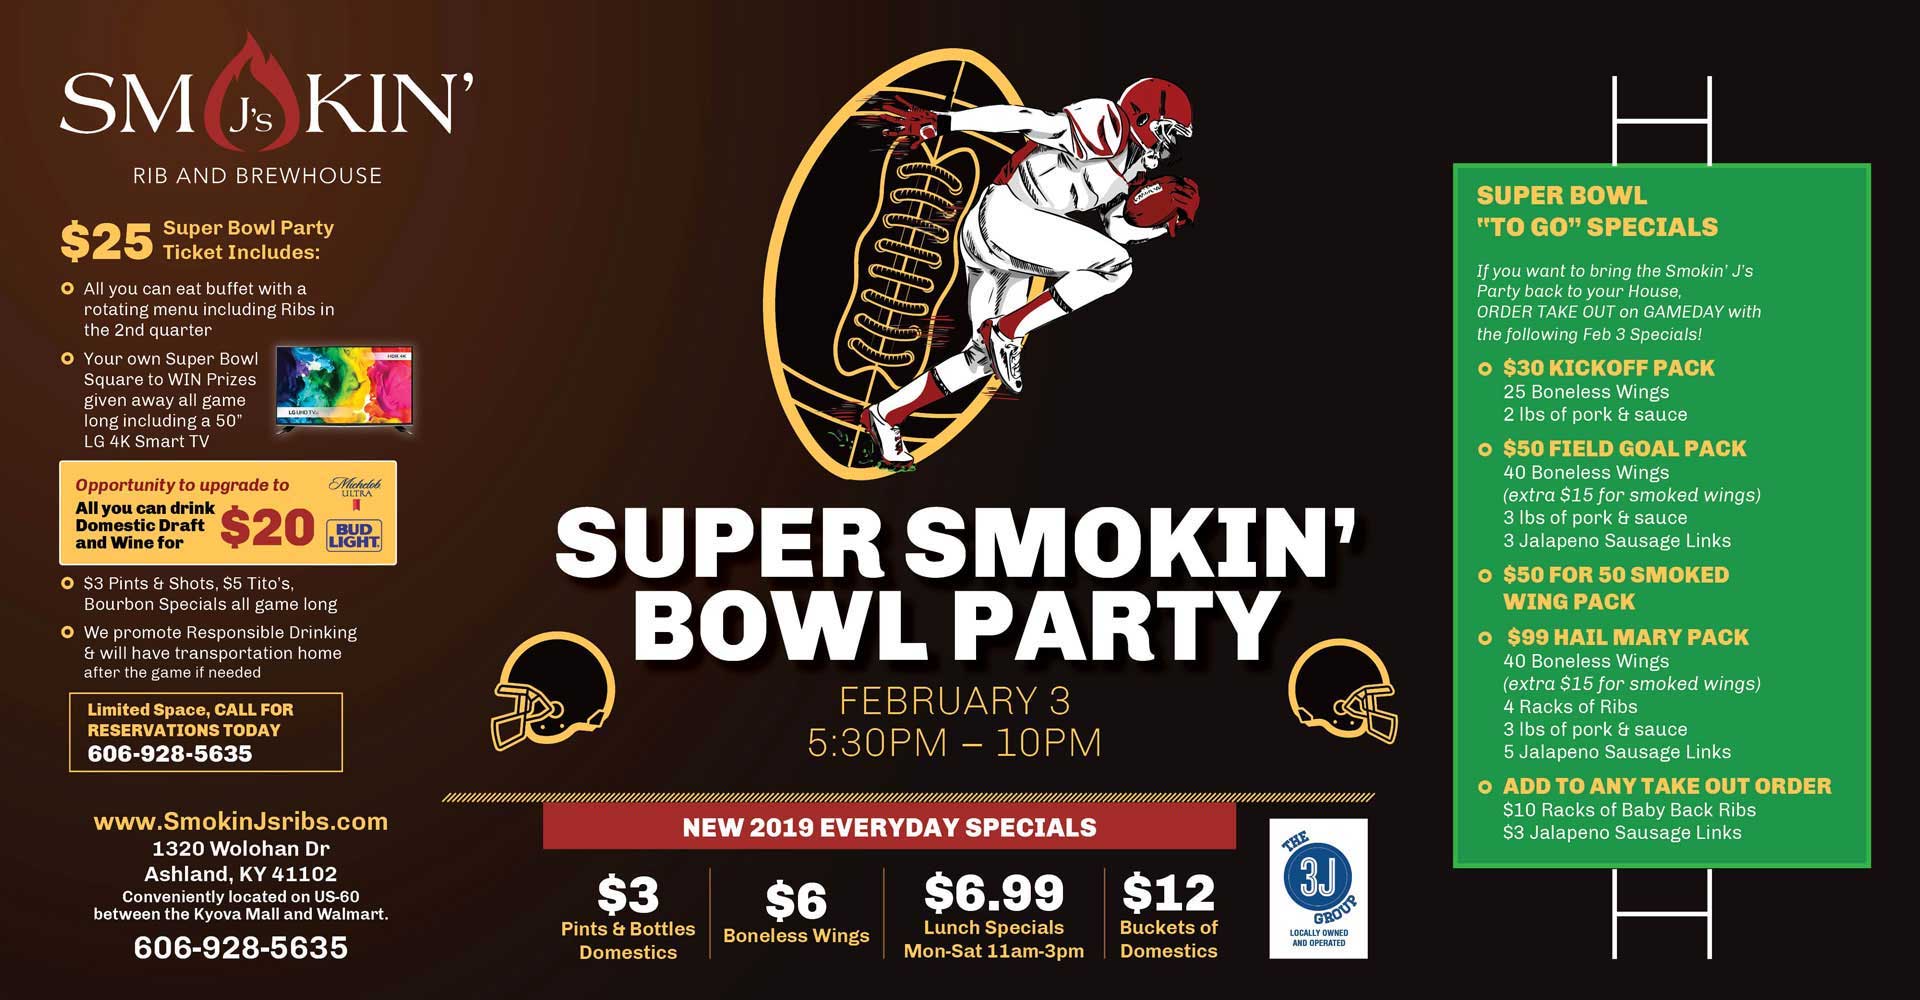 Super Bowl Party, BBQ, Ashland, KY